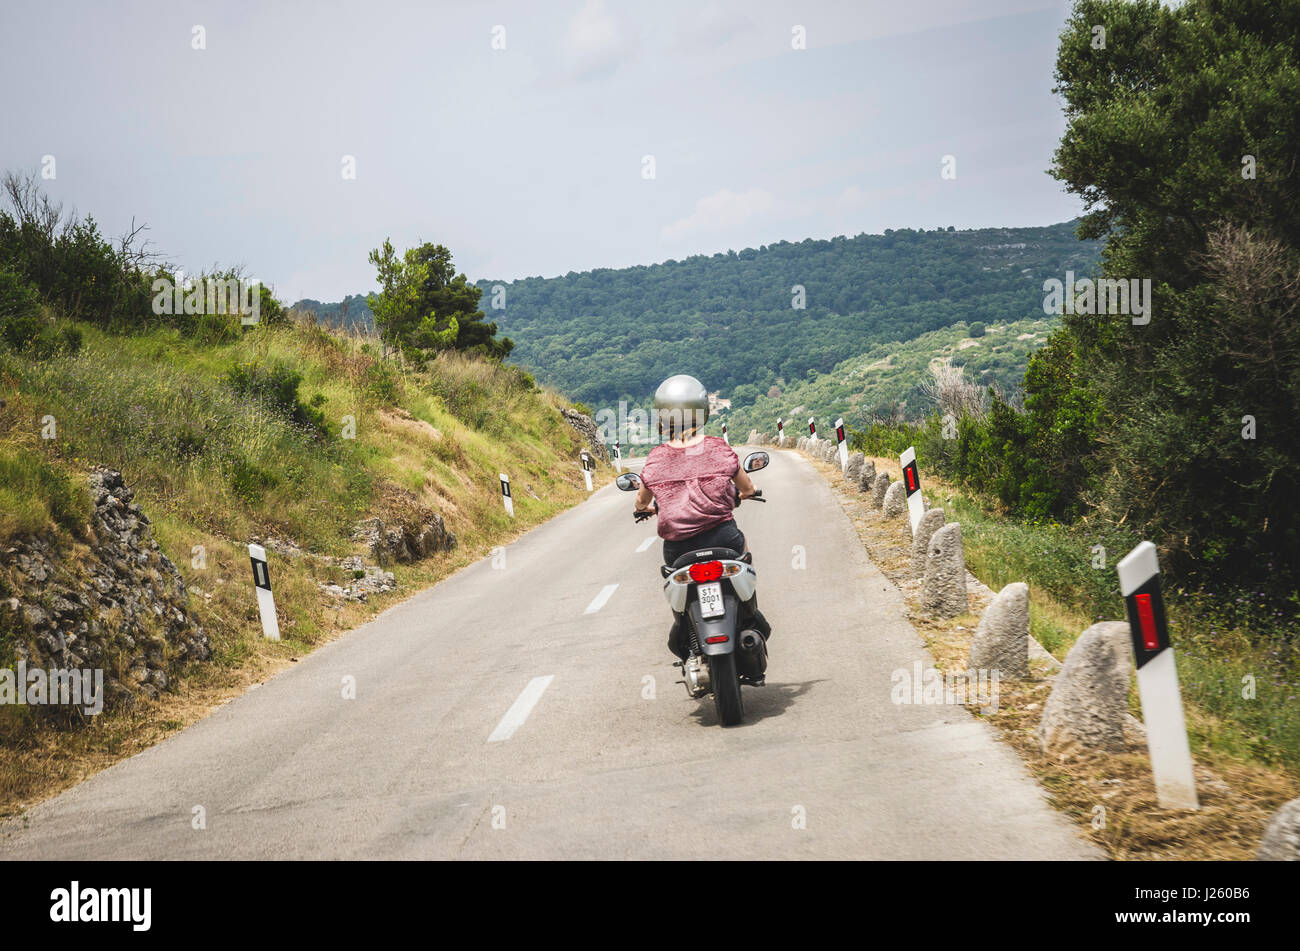 Young Woman Riding Motor Scooter Through Island of Vis, Croatia Stock Photo  - Alamy